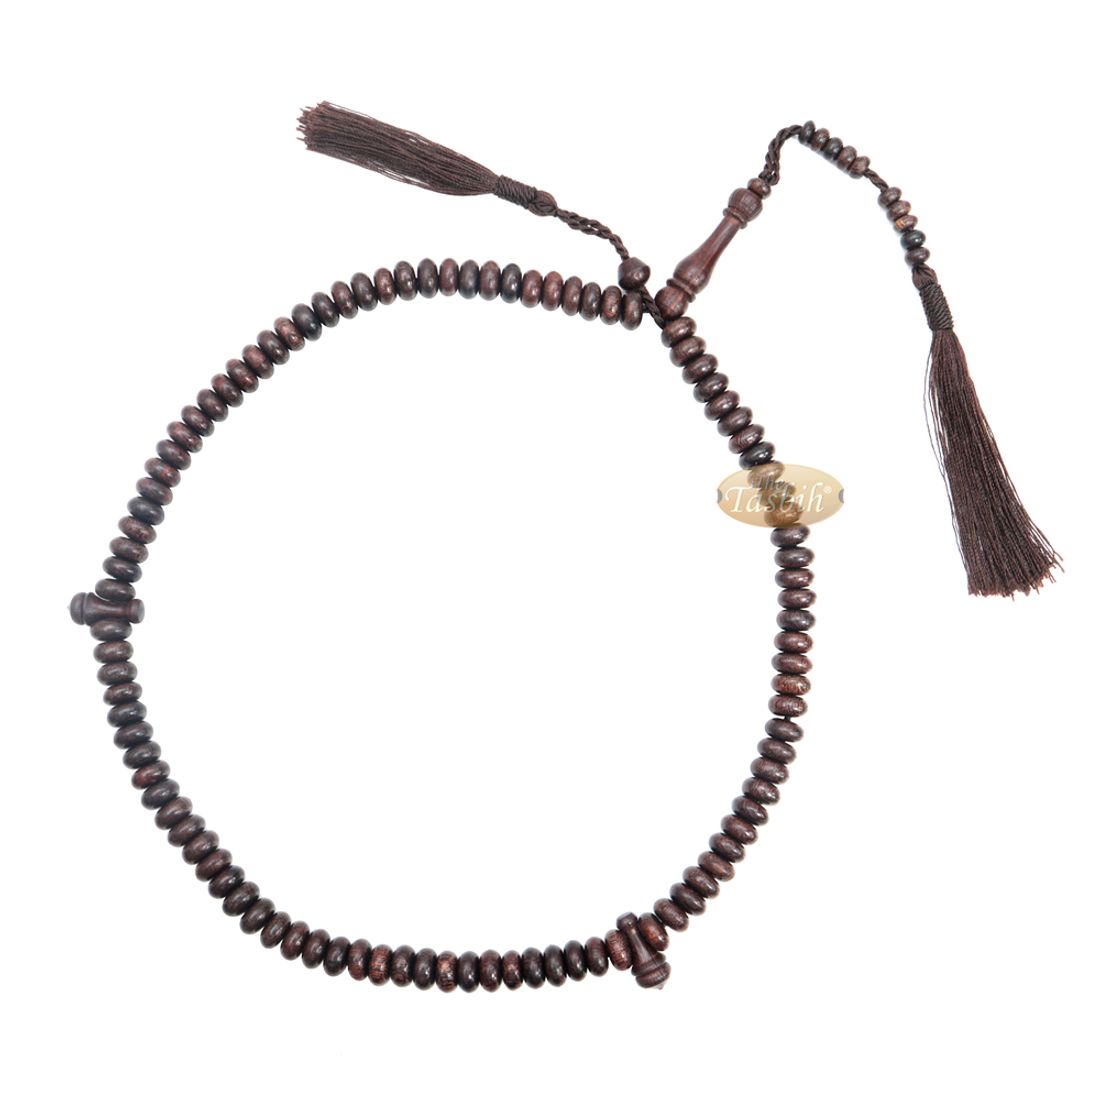 Prayer Beads – 10mm 99-Bead Flat Oval Tamarind Tasbih with Matching Dark Brown Tassels and 10-bead Counter